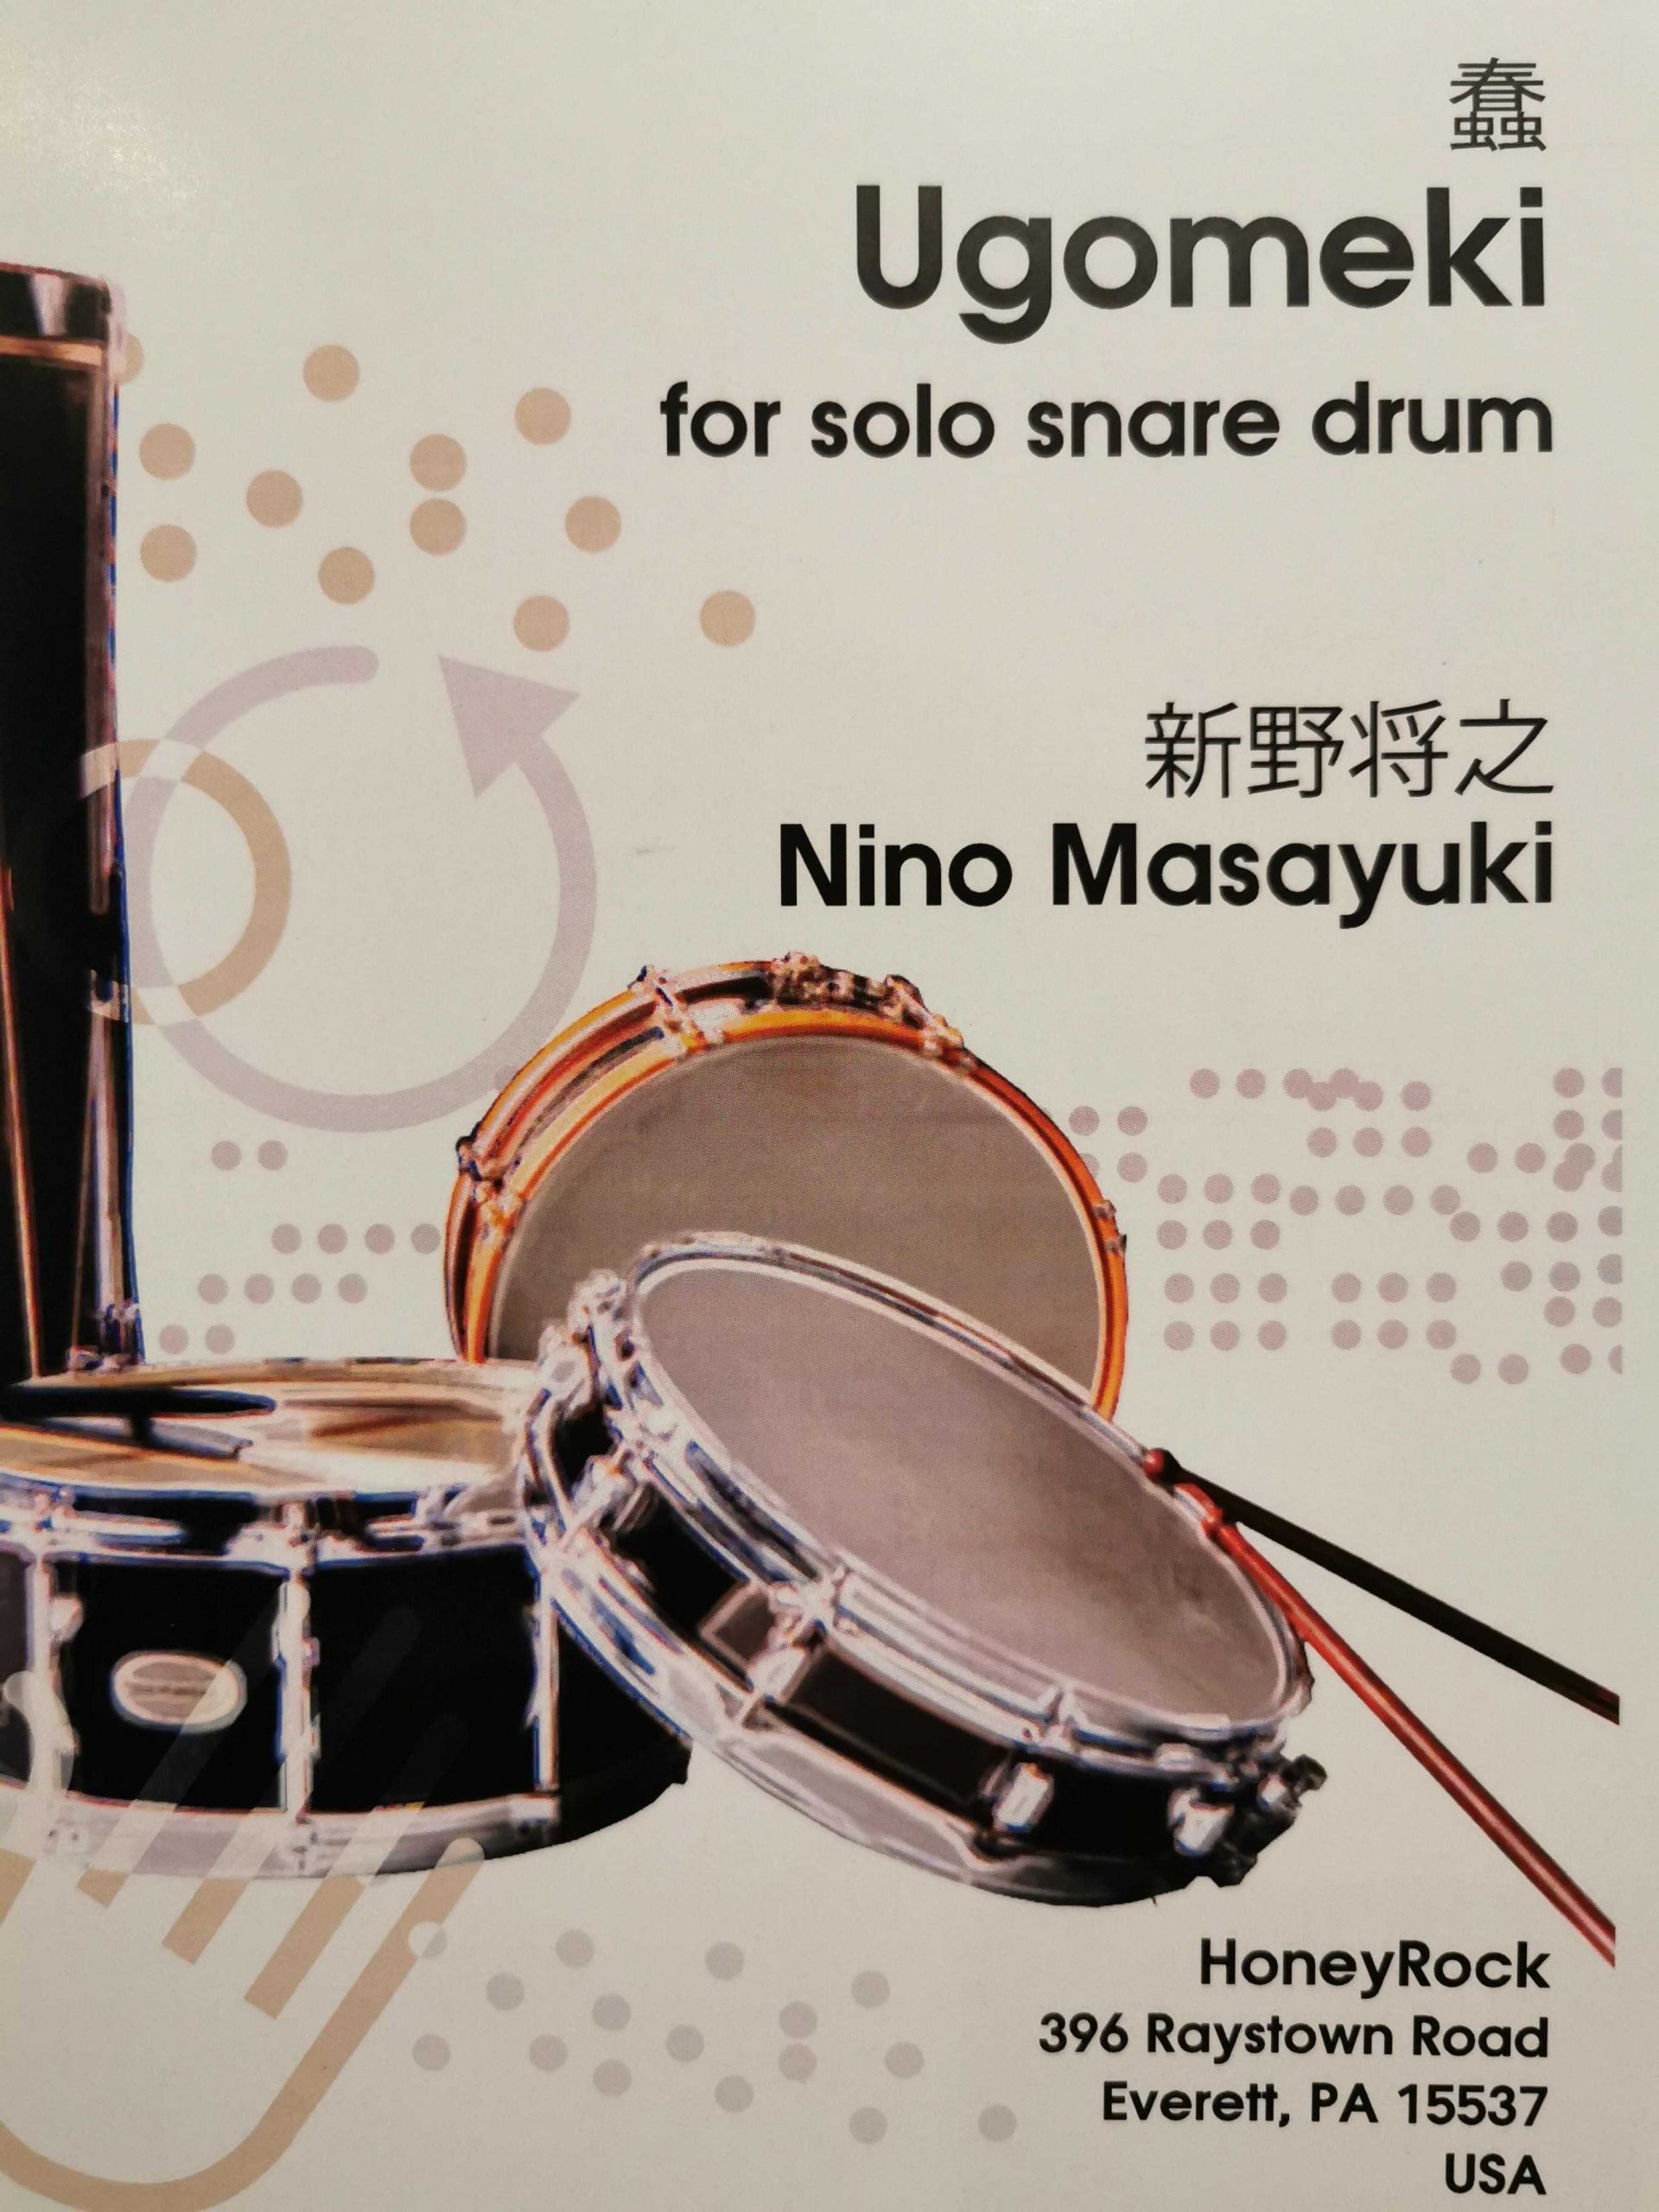 Ugomeki for solo snare drum by Nino Masayuki